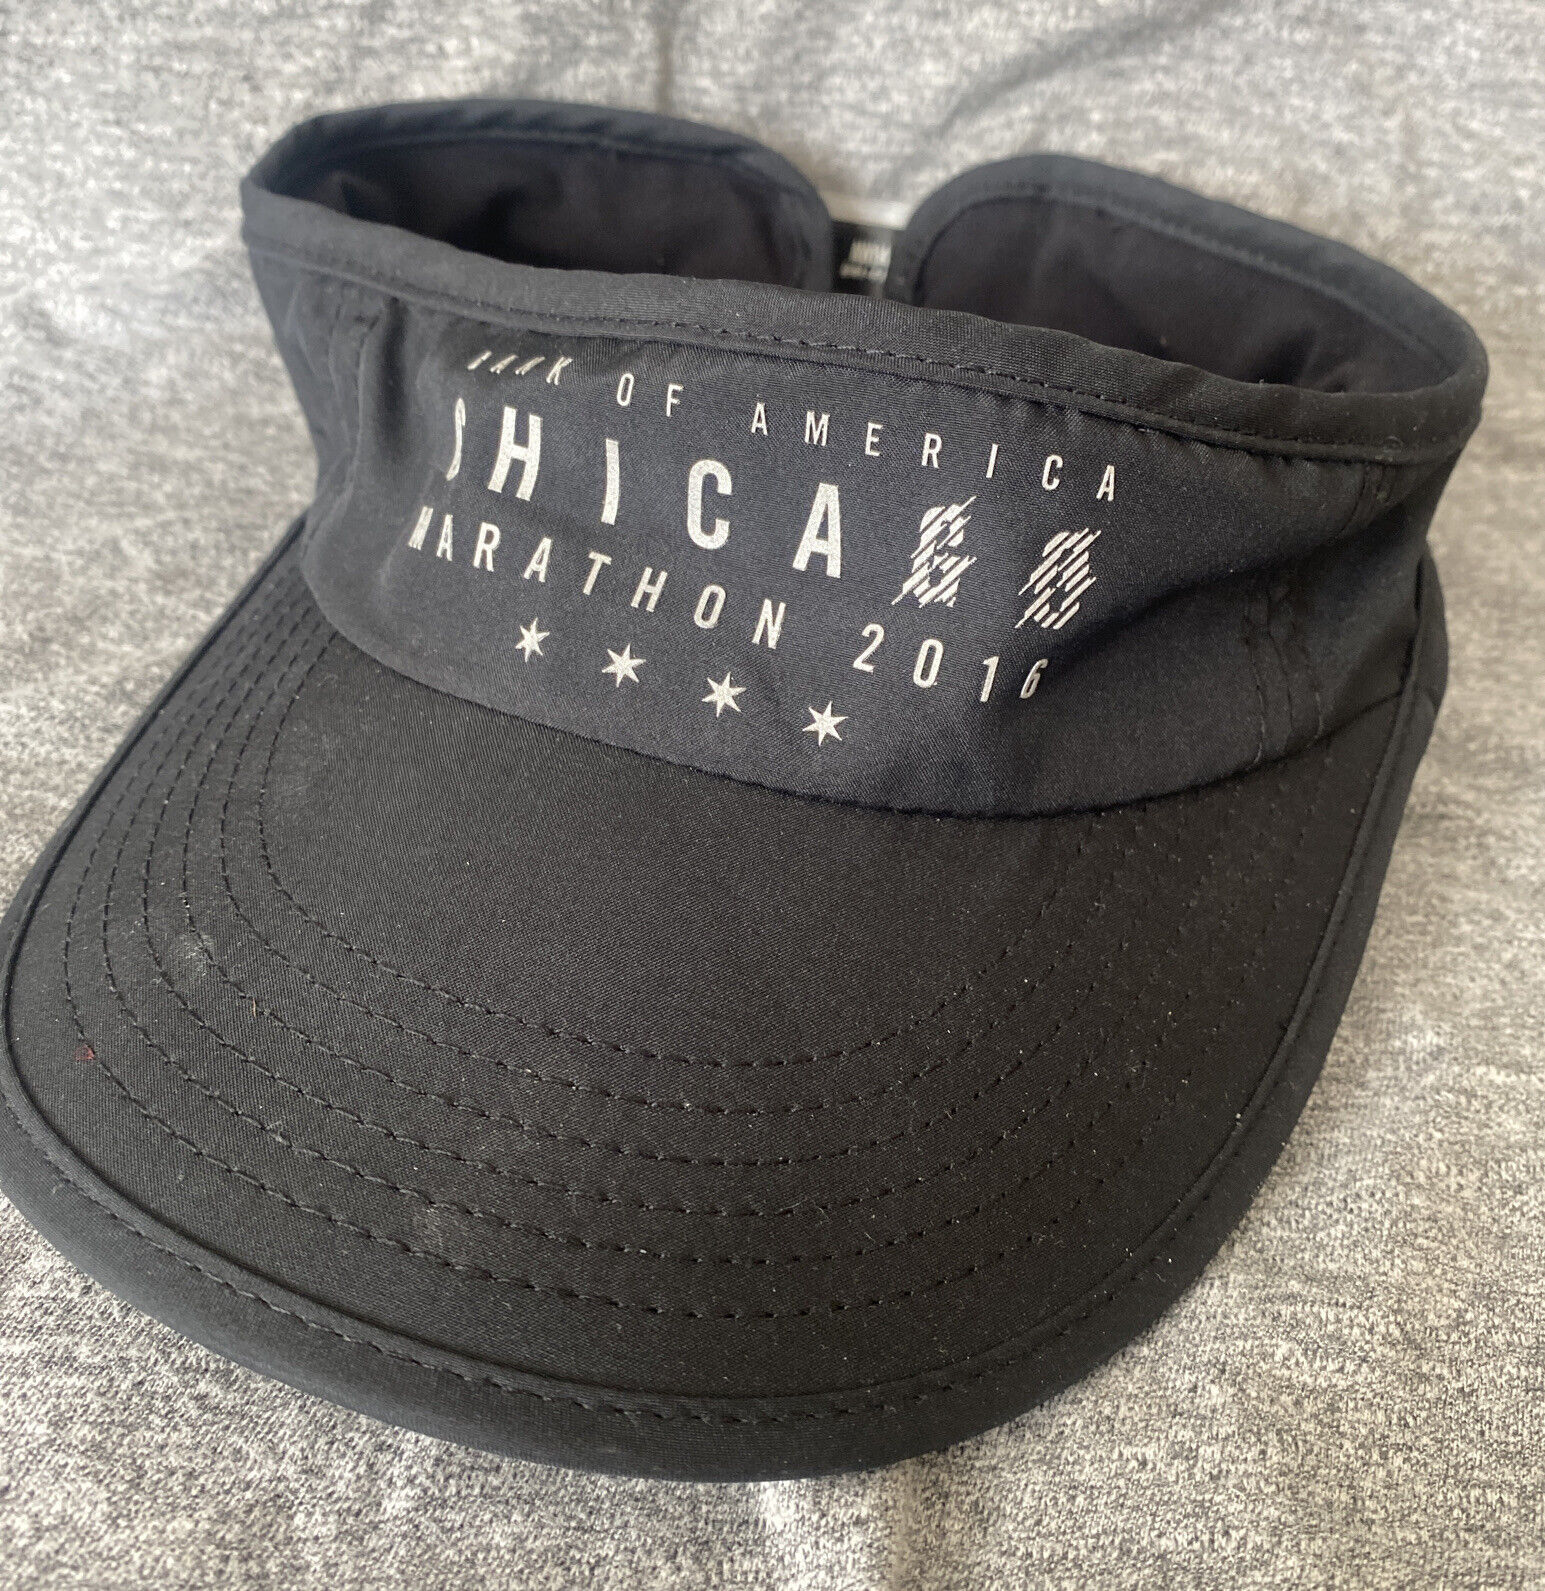 Nike Bank Of America Chicago Marathon 2016 Dri-fit Visor Hat Cap Lid Black